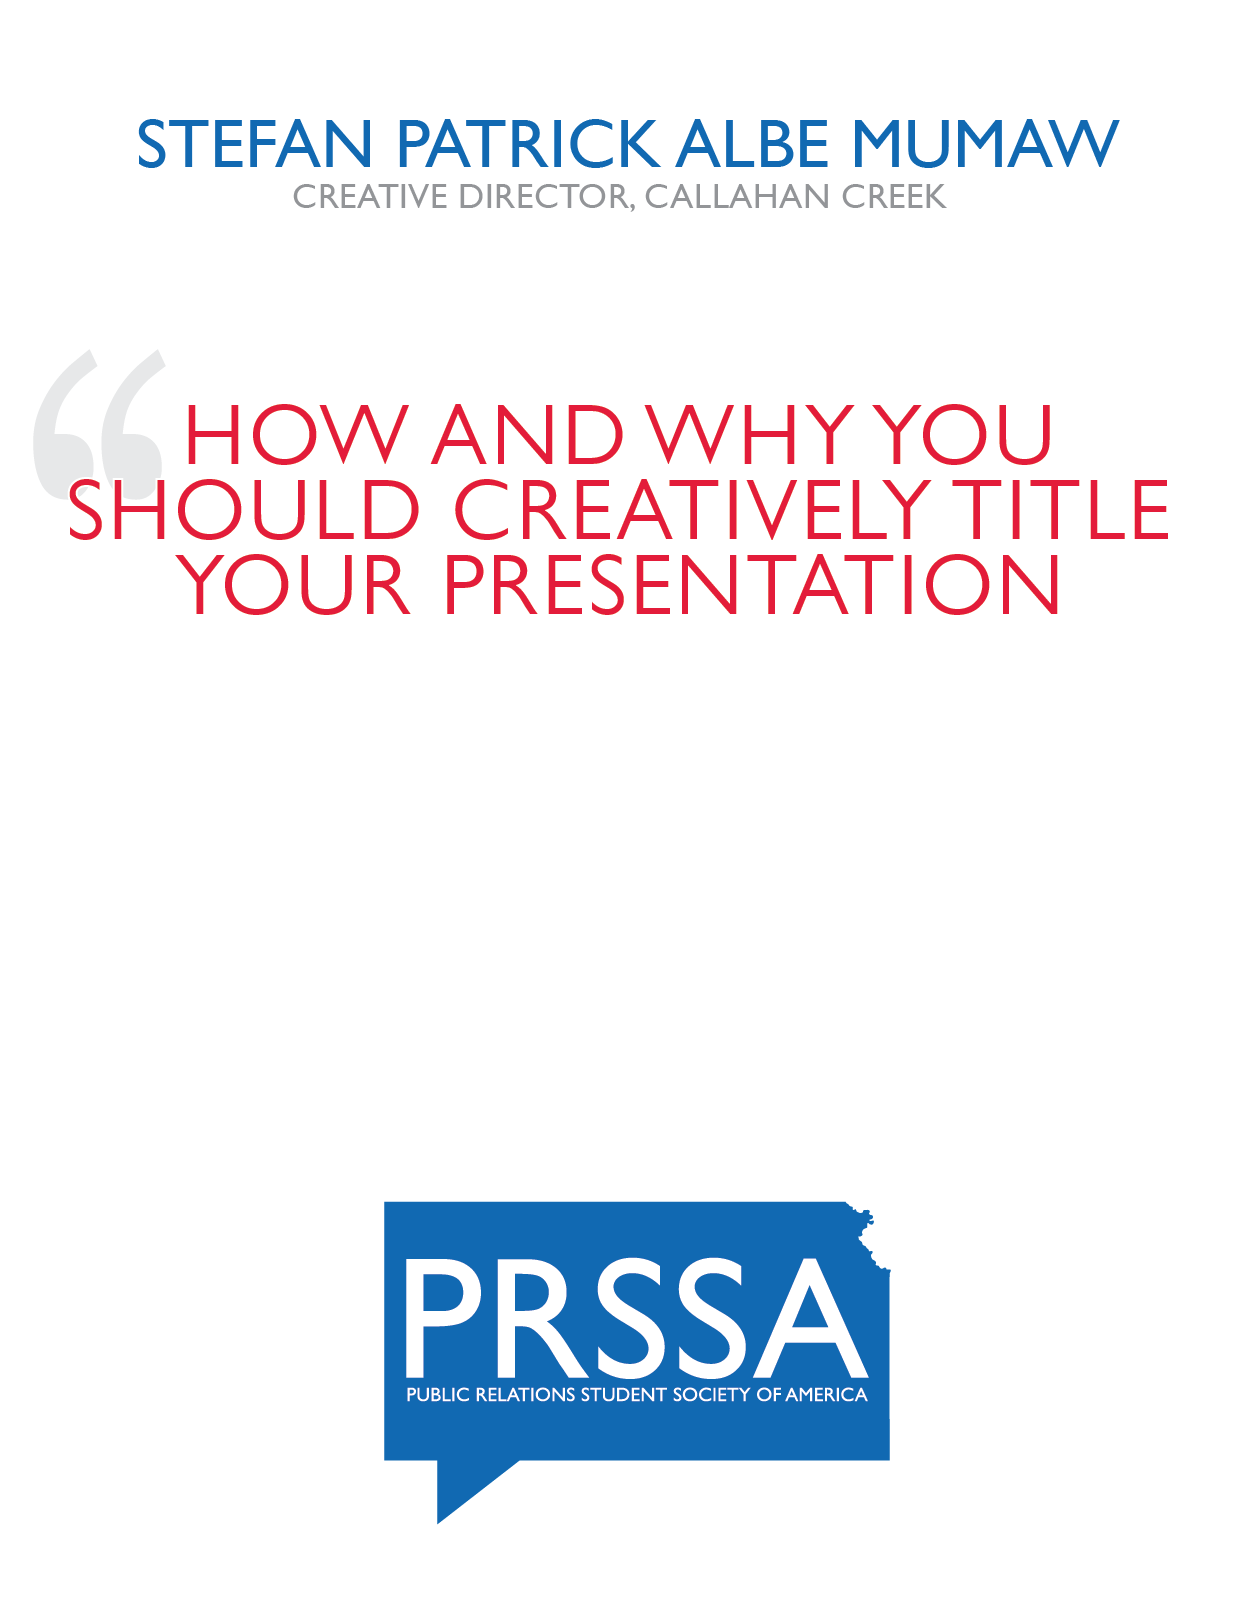 PRSSA Branding and Promotion